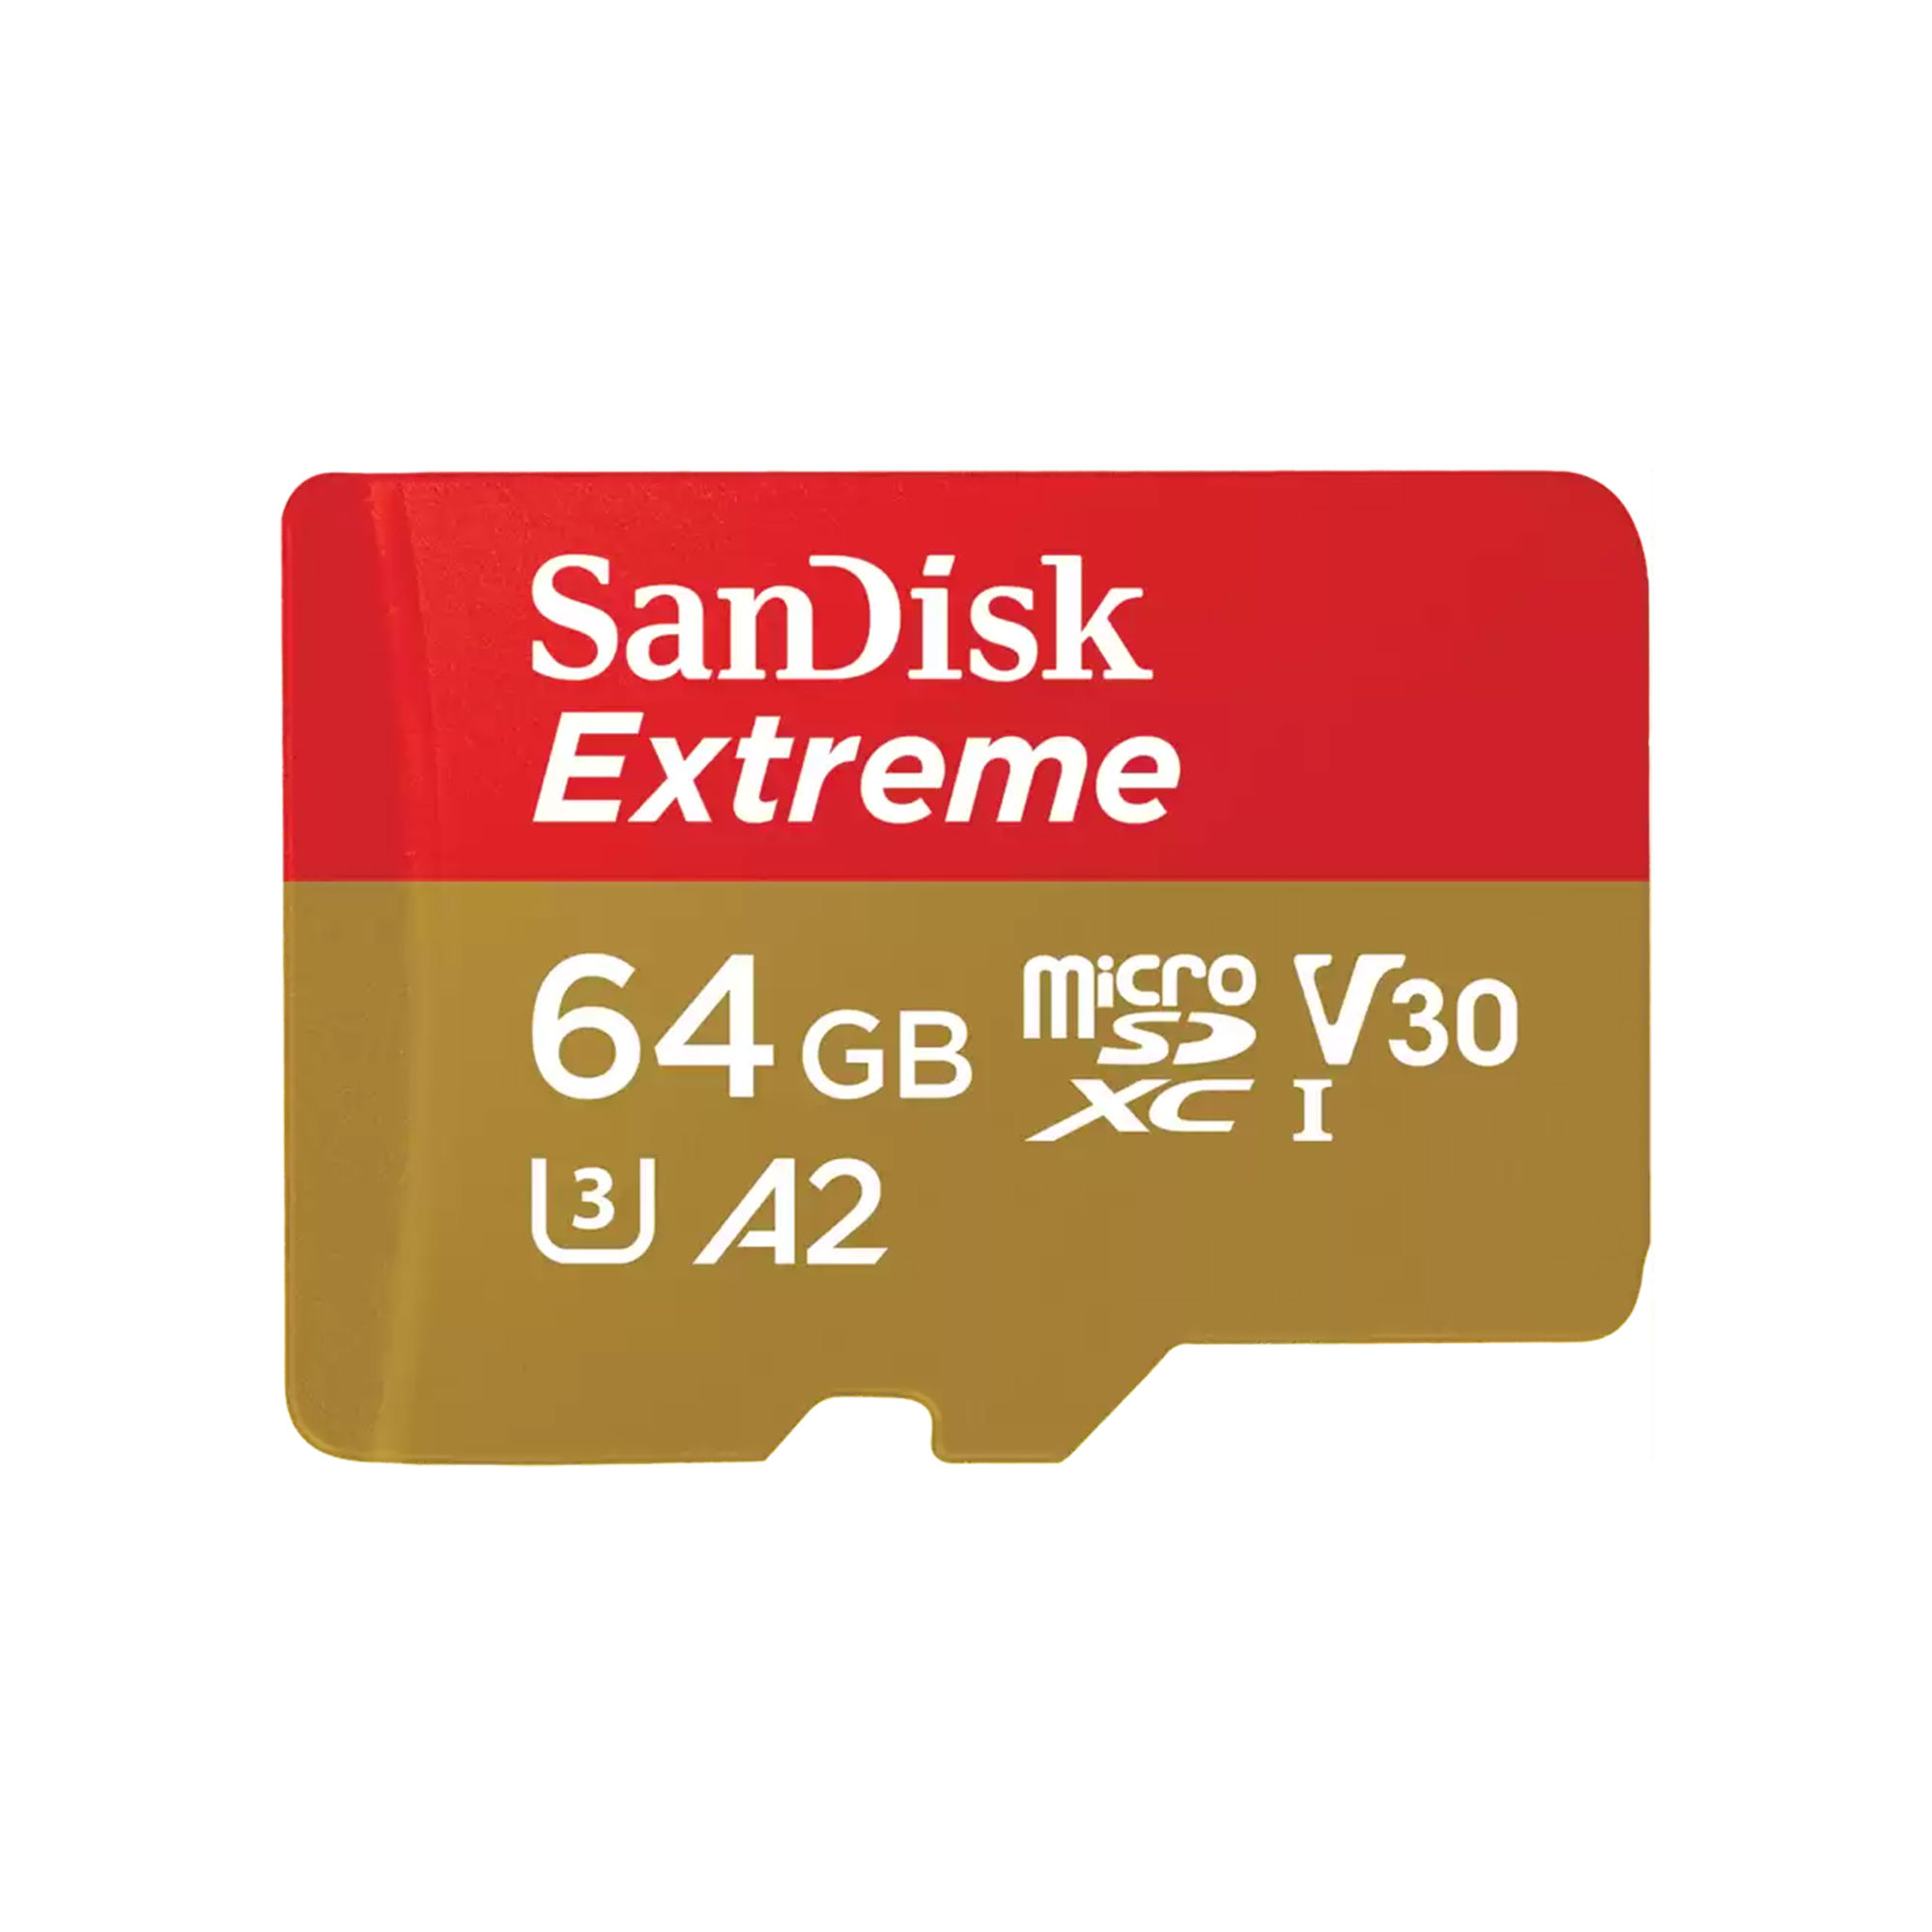 Sandisk Extreme MicroSD V30 A2